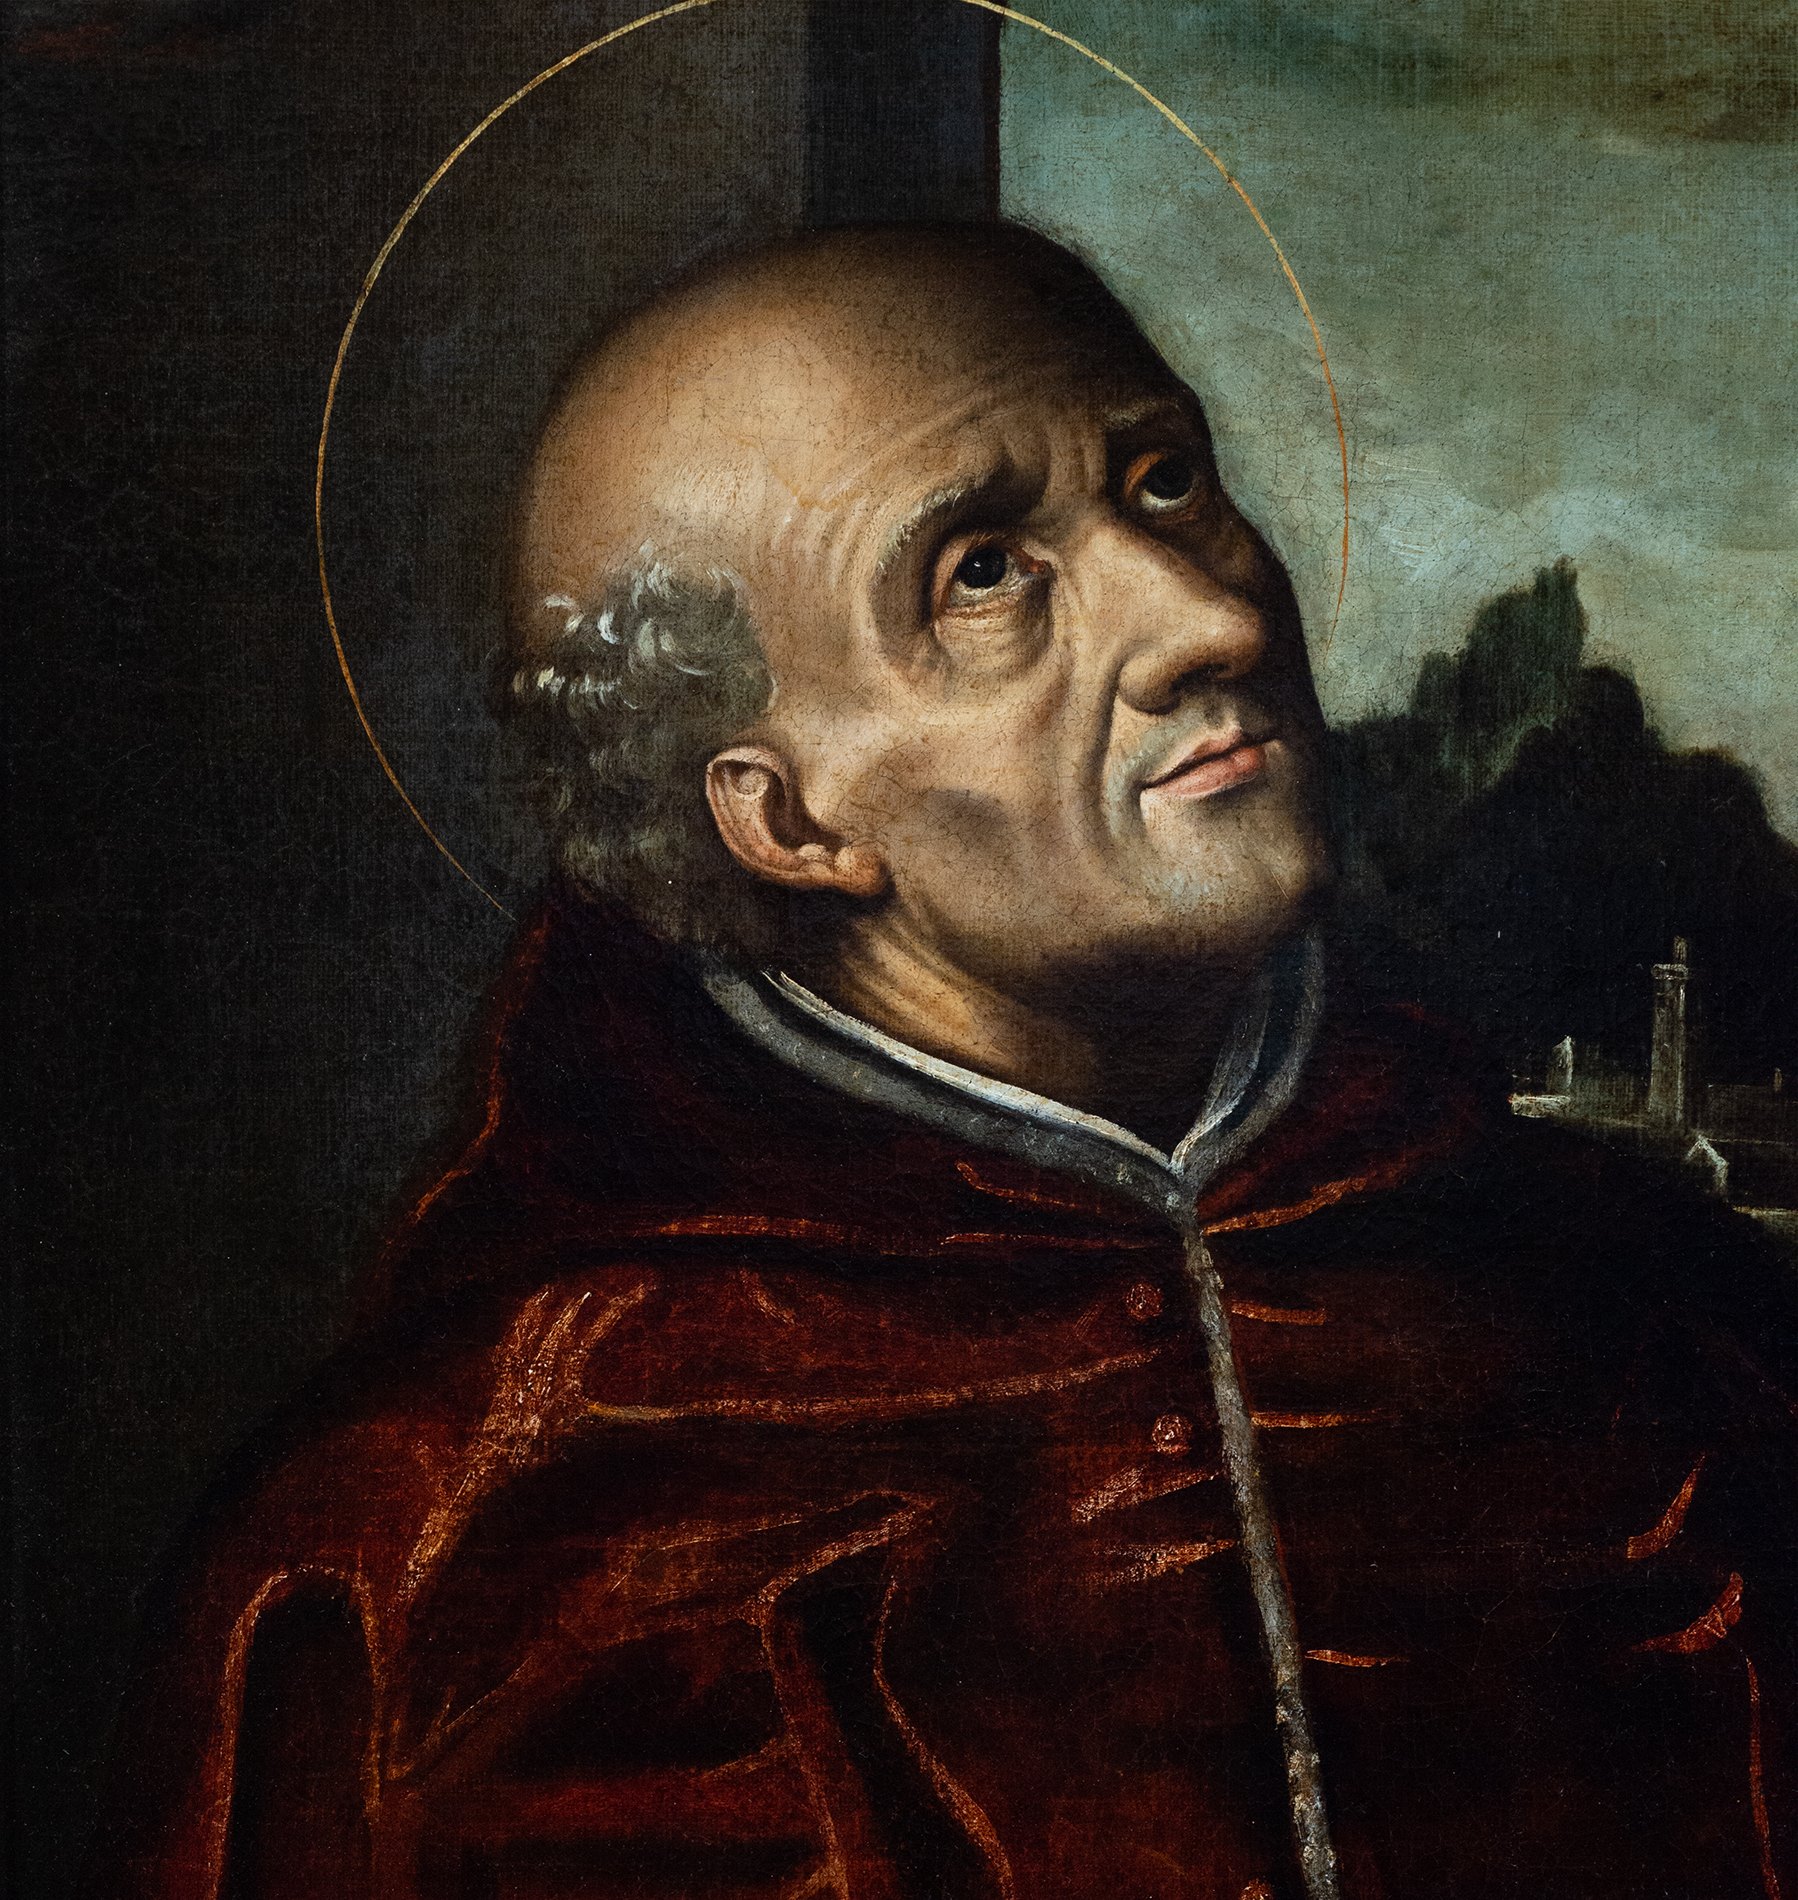 Portrait of Saint Thomas Aquinas, Italian school of the 17th century - Image 4 of 6